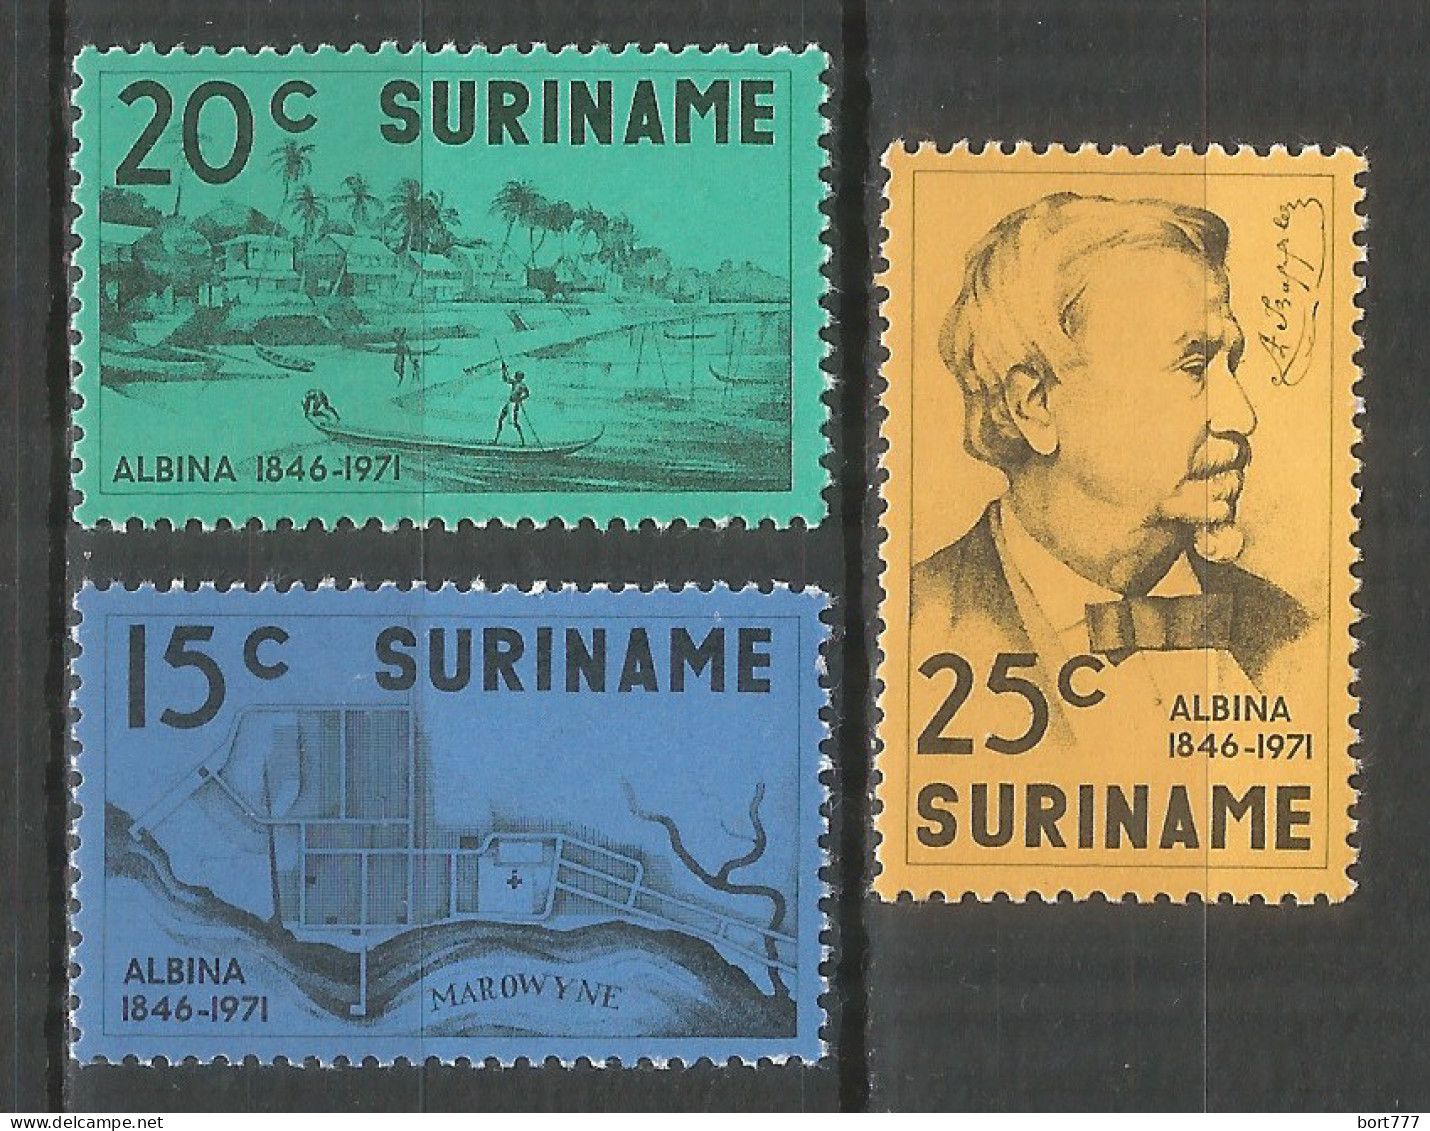 Surinam 1971 Mint Stamps Set MNH (**)  - Surinam